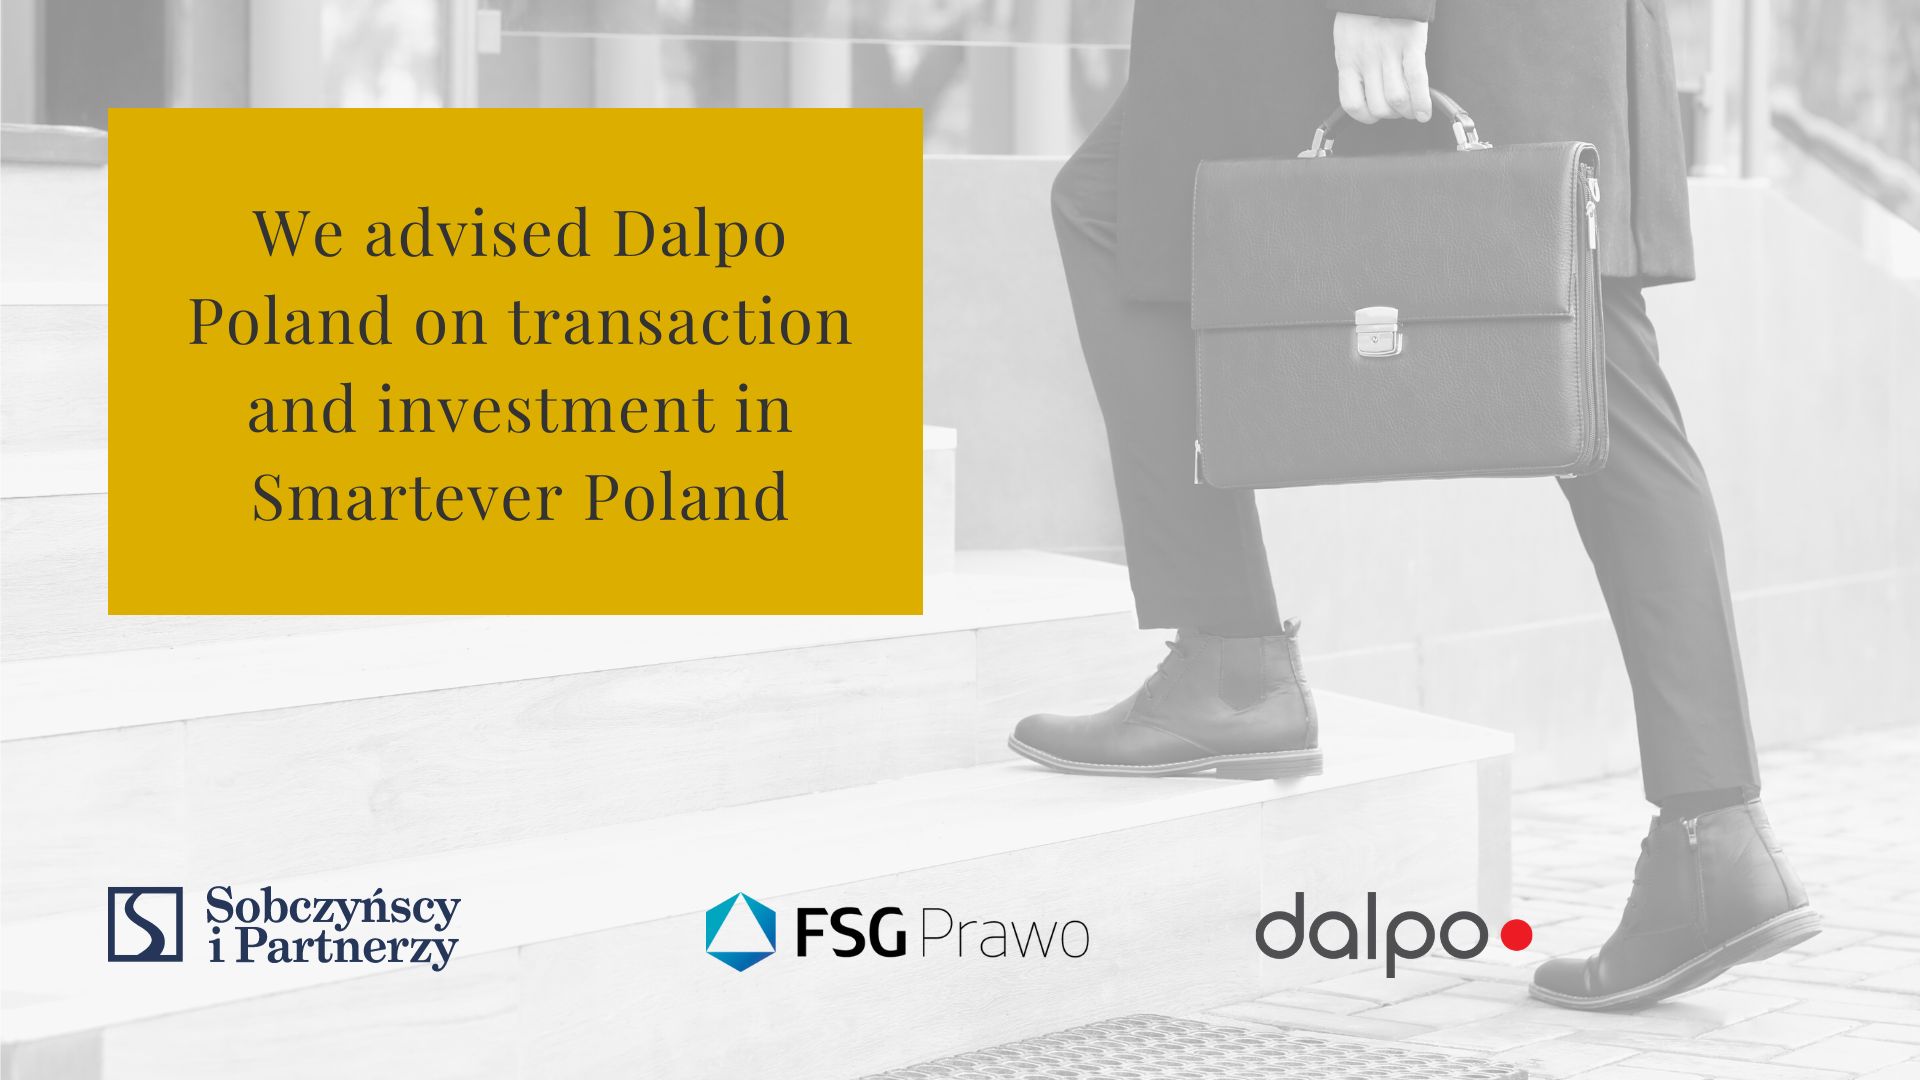 Sobczyńscy i Partnerzy | FSG Prawo advised Dalpo Poland on transaction and investment in Smartever Poland